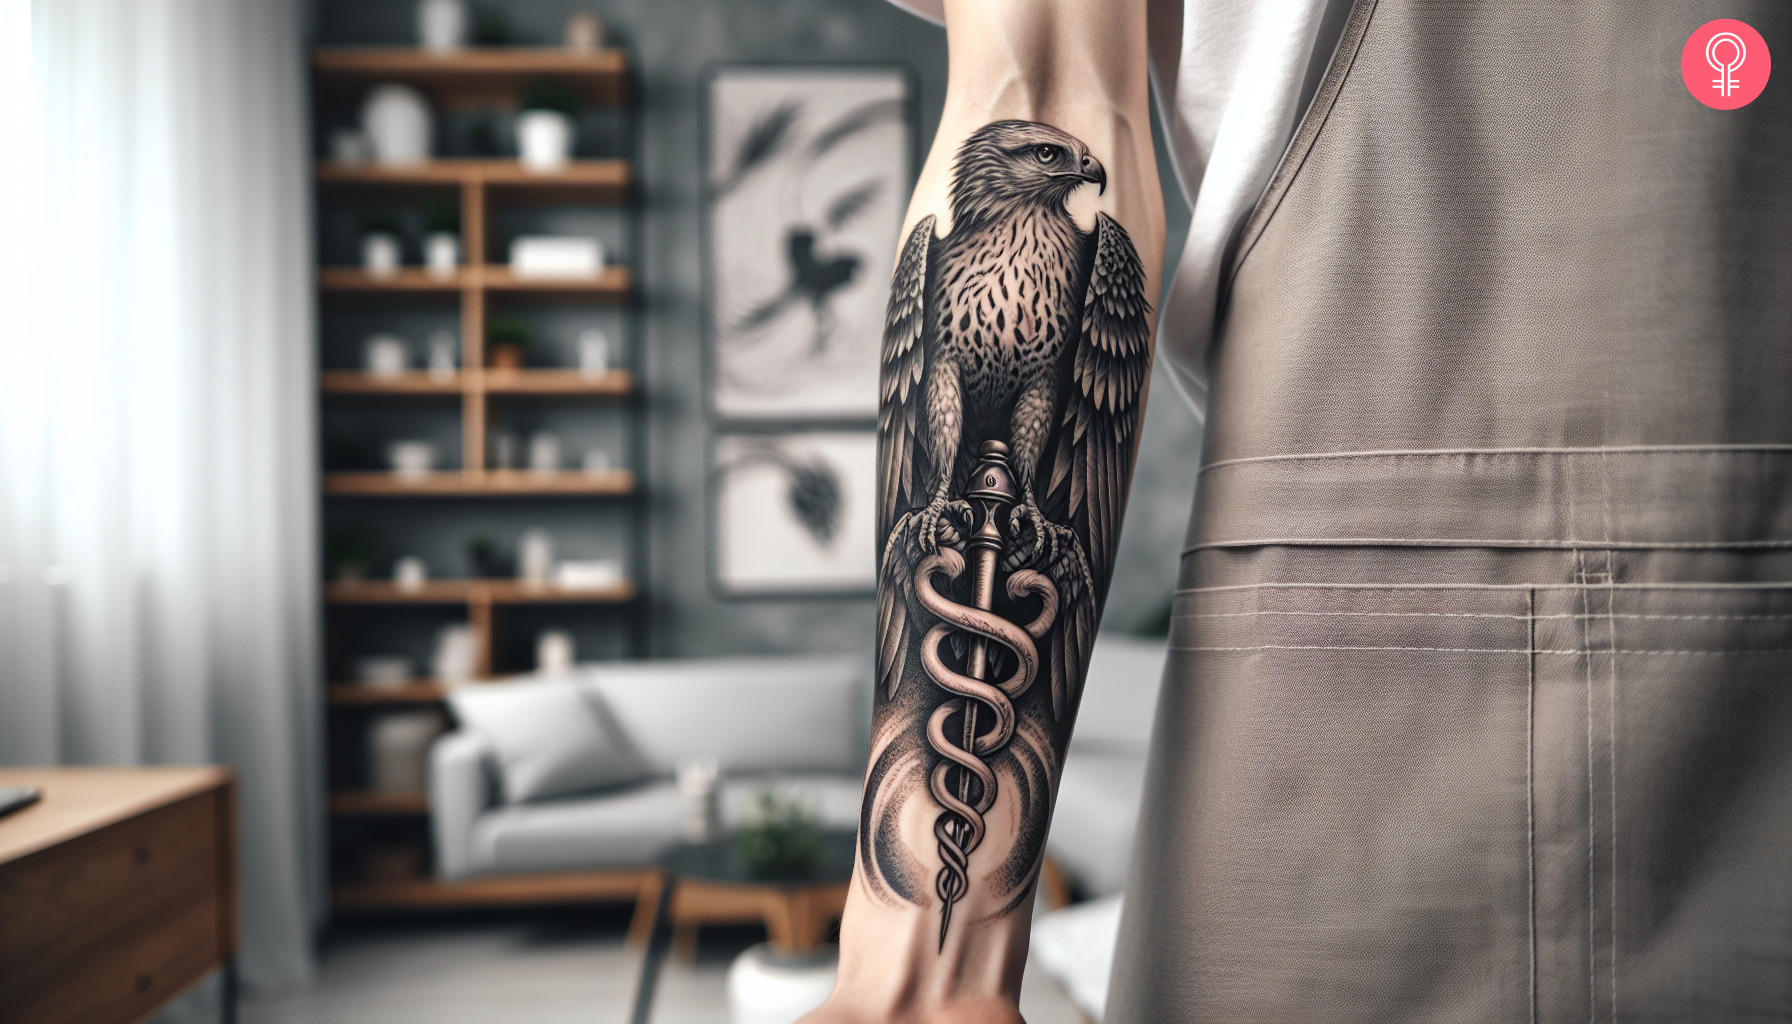 A bird of hermes tattoo featuring a hawk seated on a caduceus